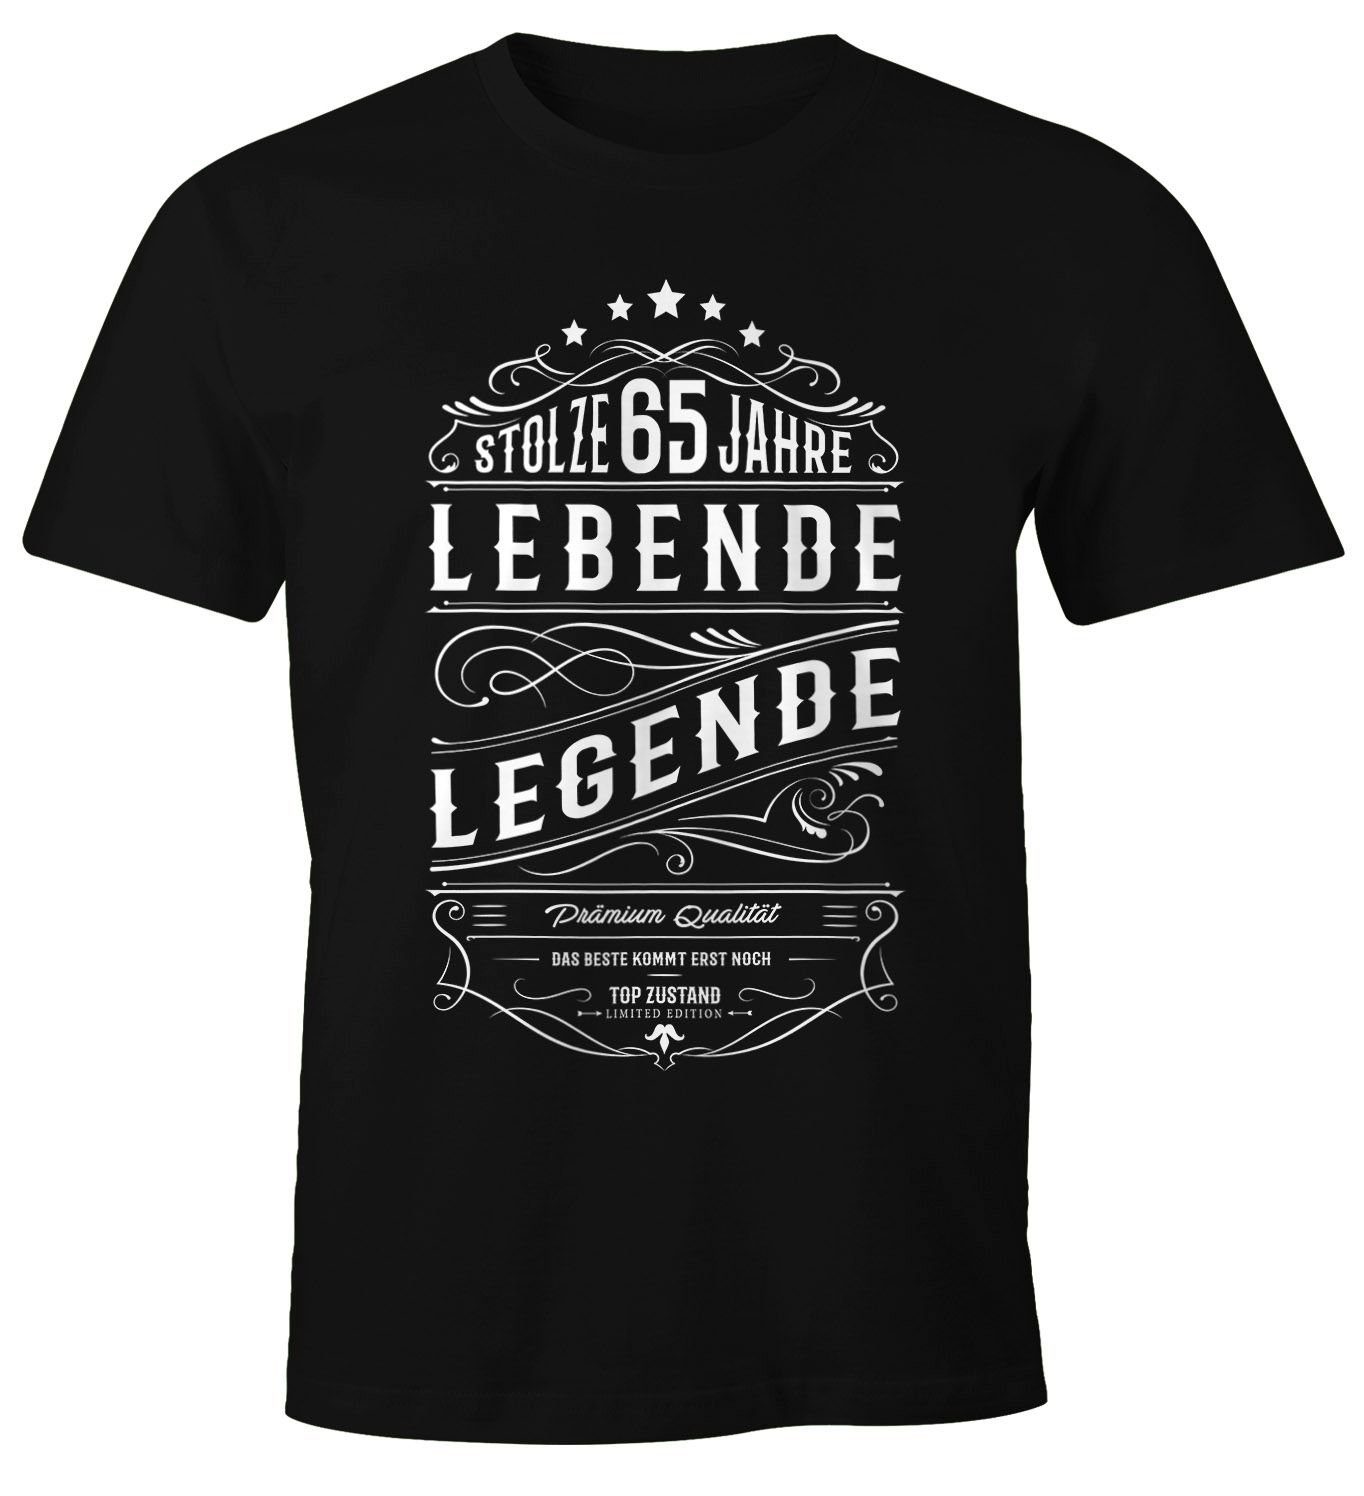 MoonWorks Print-Shirt Herren Geschenk T-Shirt Legende Geburtstag Jahre Print stolze 65 schwarz 30-80 Lebende mit Moonworks®